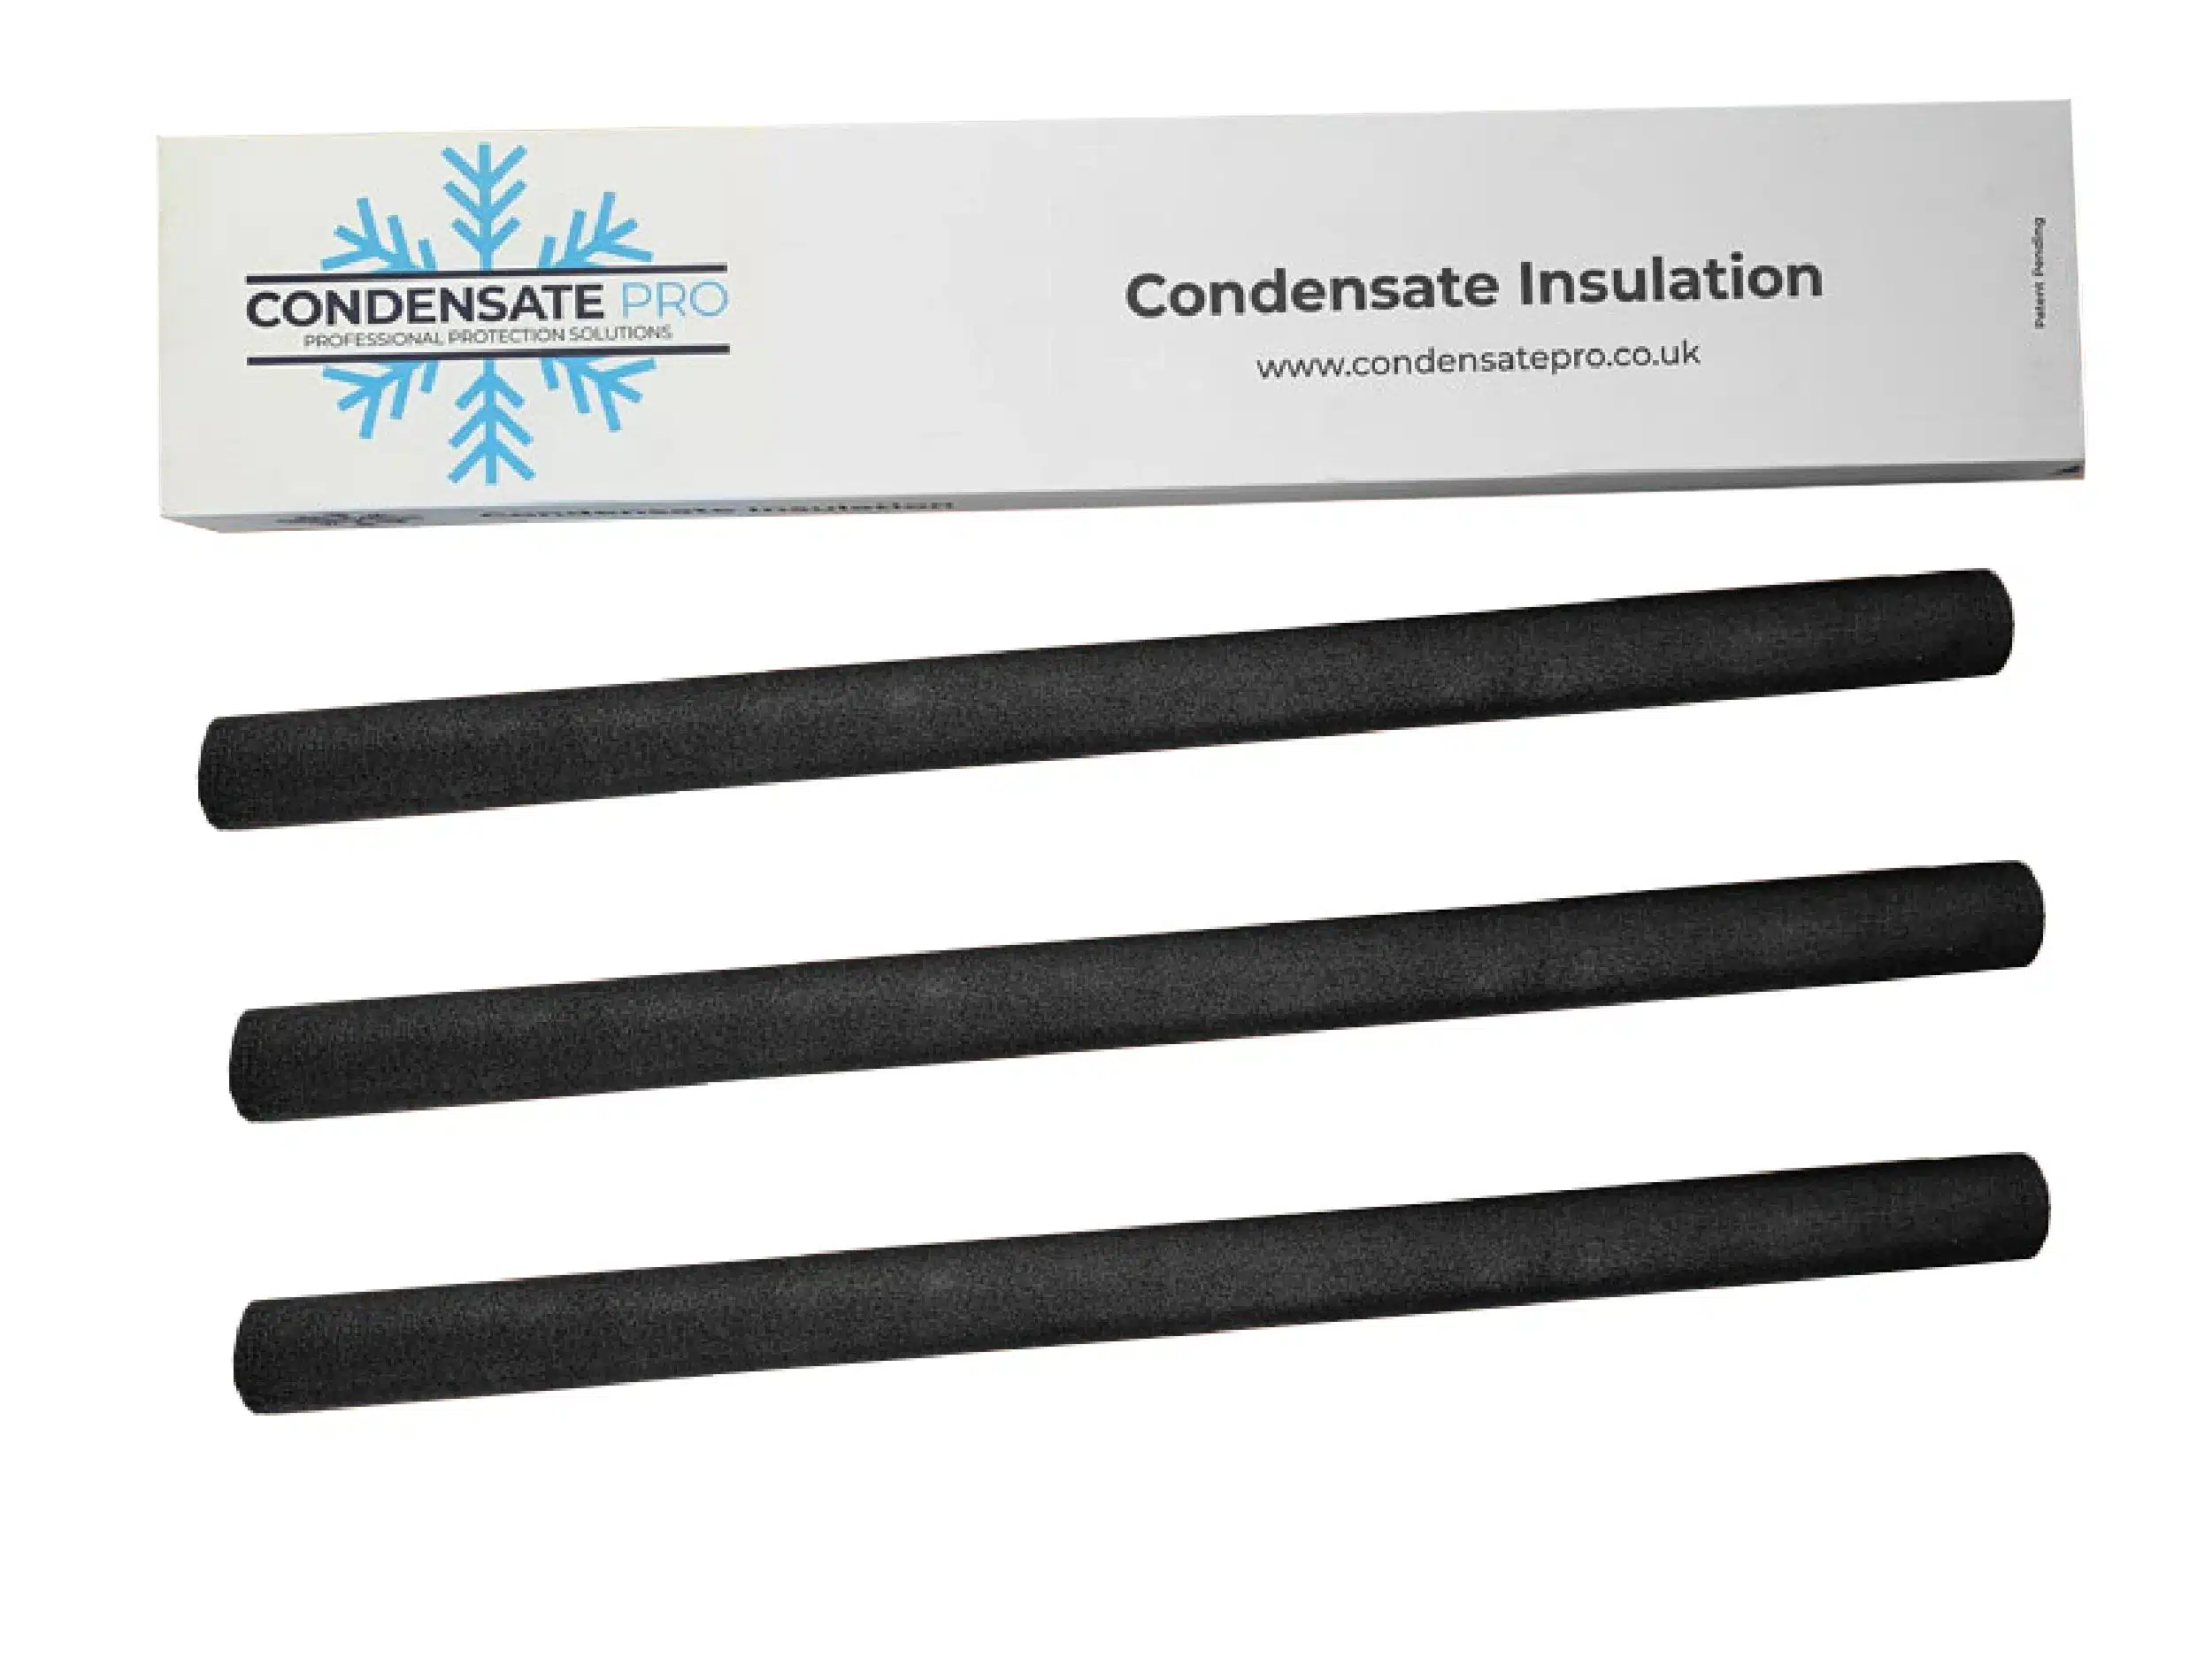 Condensate Pro Insulation